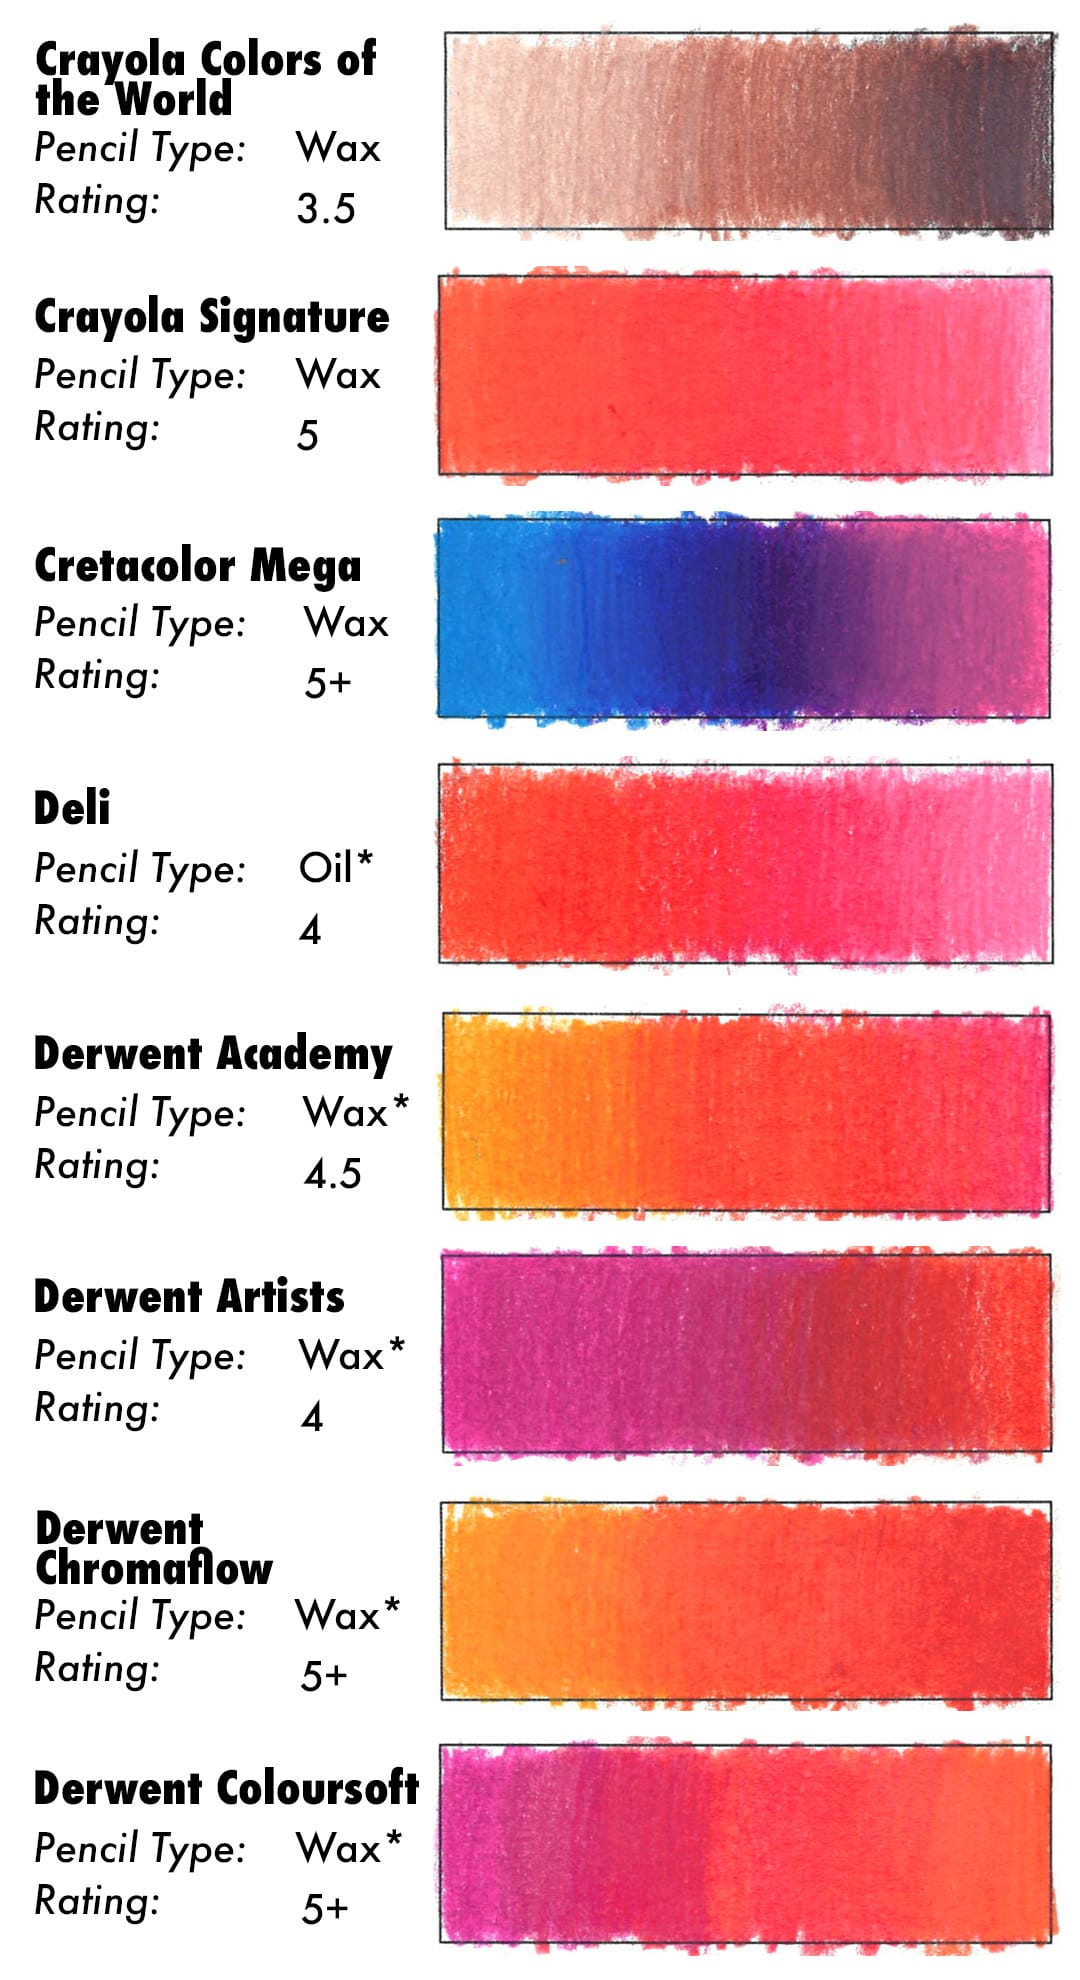 Colored Pencil Blending Results for Crayola Colors of the World, Crayola signature, Cretacolor Mega, Deli, Derwent Academy, Derwent Artists, Derwent Chromaflow, and Derwent Coloursoft.